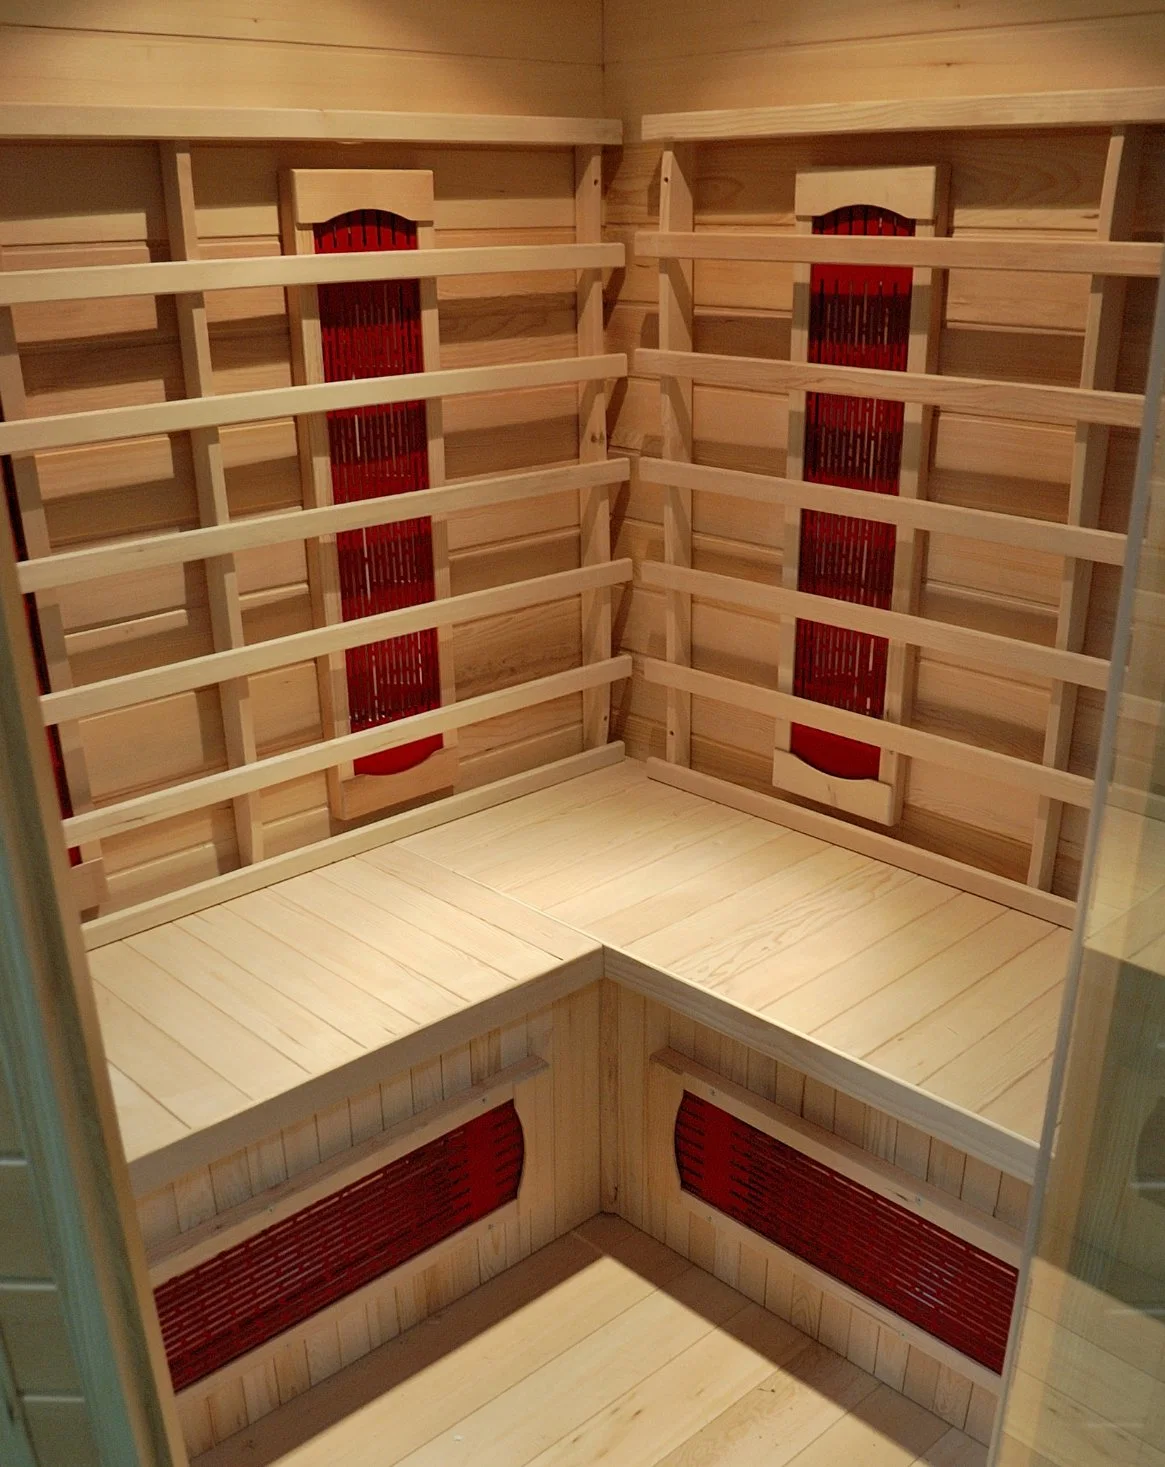 Hemlock or Red Cedar Far Infrared Sauna Room Indoor Use Relax Sauna